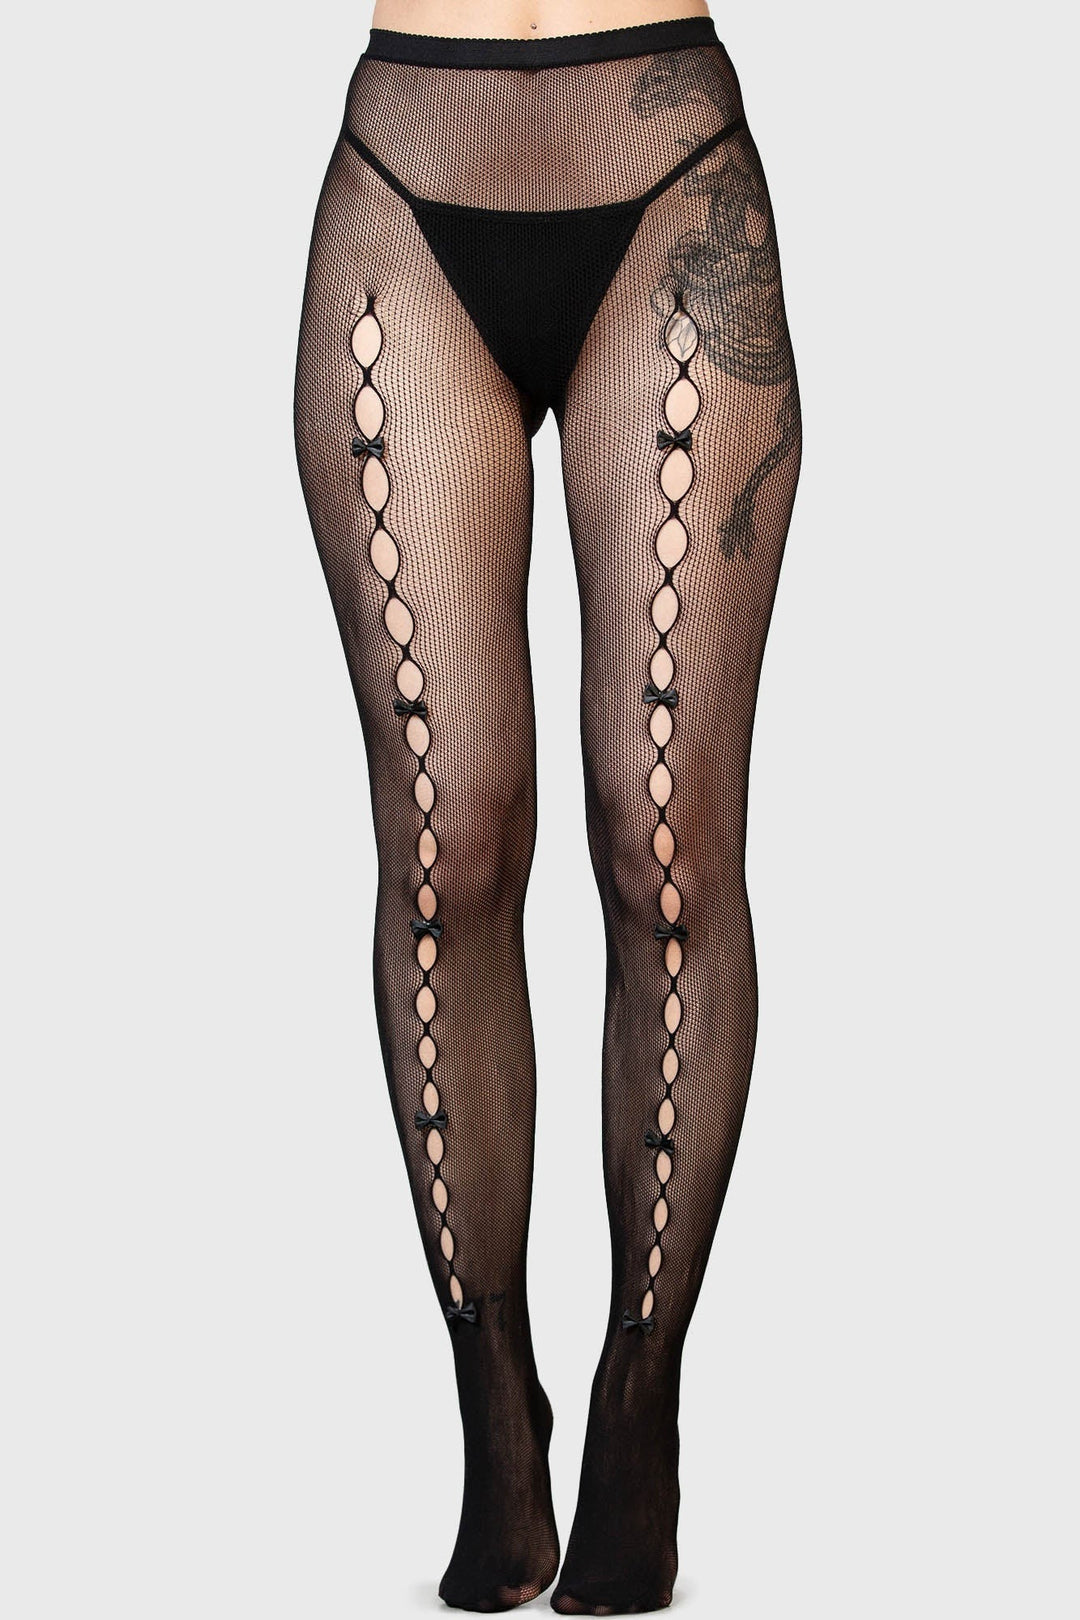 womens black fishnet bow stockings